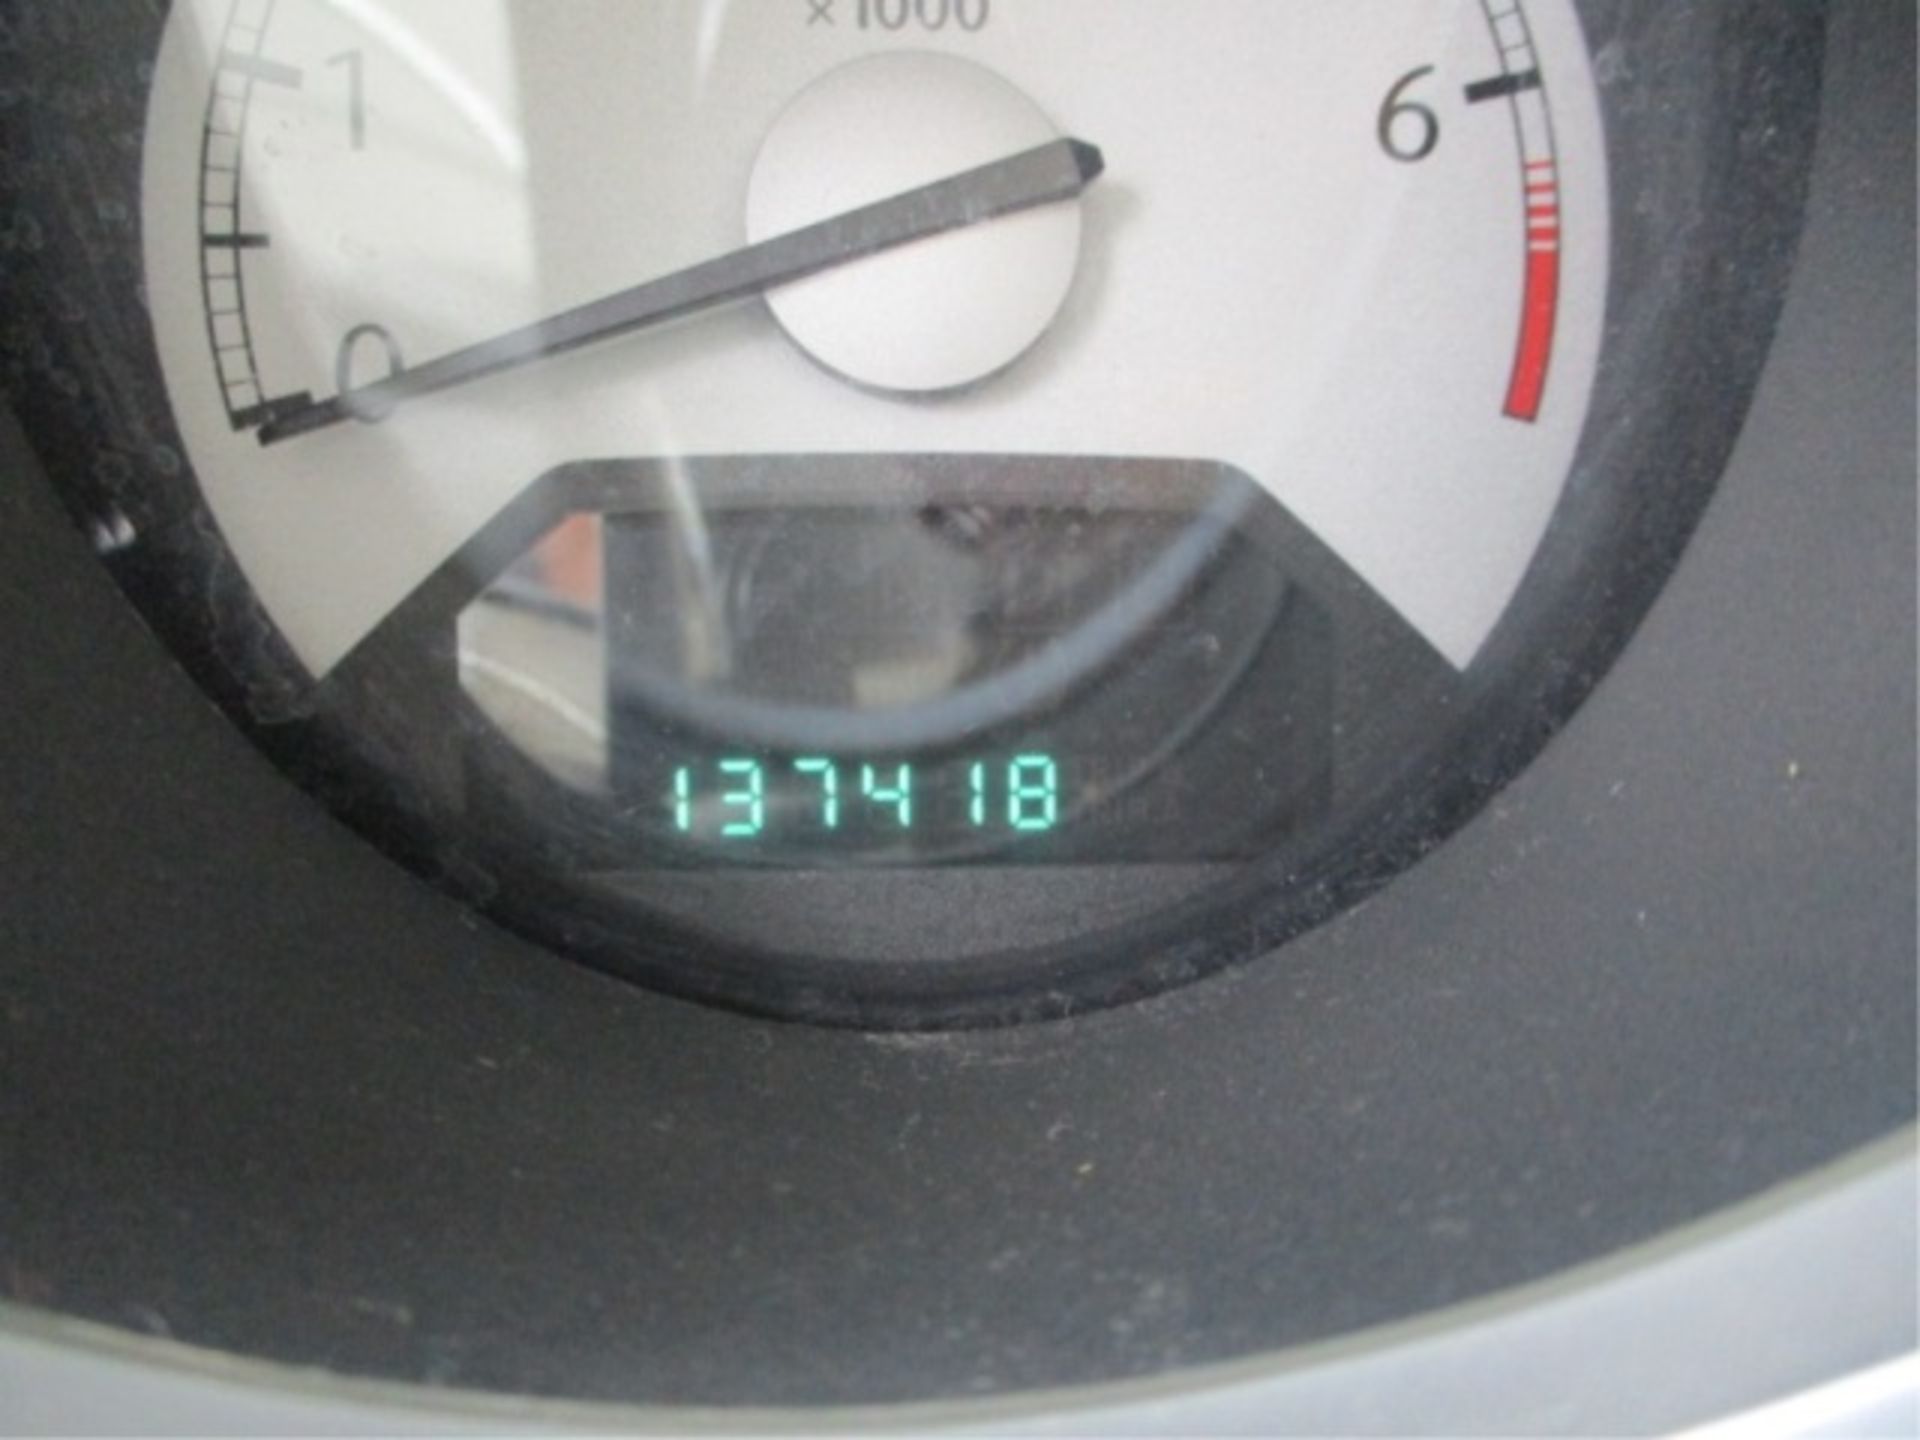 2007 Chrysler Sebring Sedan, 2.7L V6 Gas, Automatic, S/N: 1C3LC56R17N524072, Miles/Hours - 137410 - Image 21 of 22